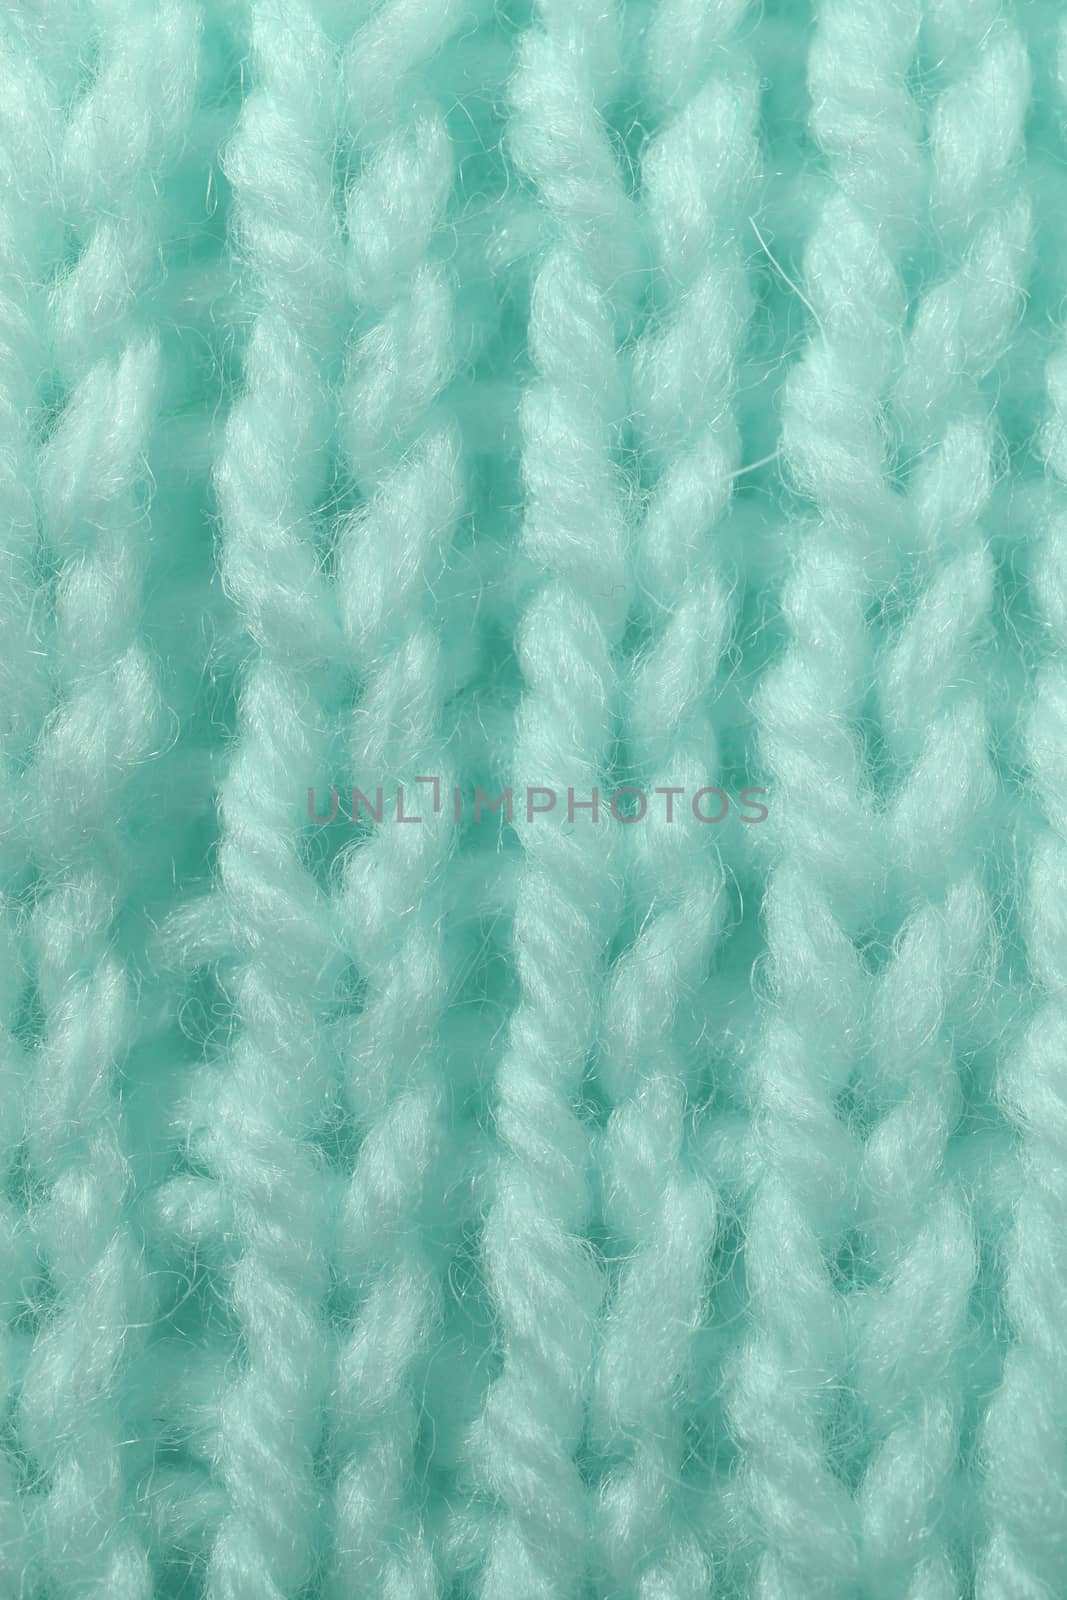 Mint Wool Knitting Texture. Vertical Across Weaving Crochet Detailed Rows. Sweater Textile Background. Macro Closeup.